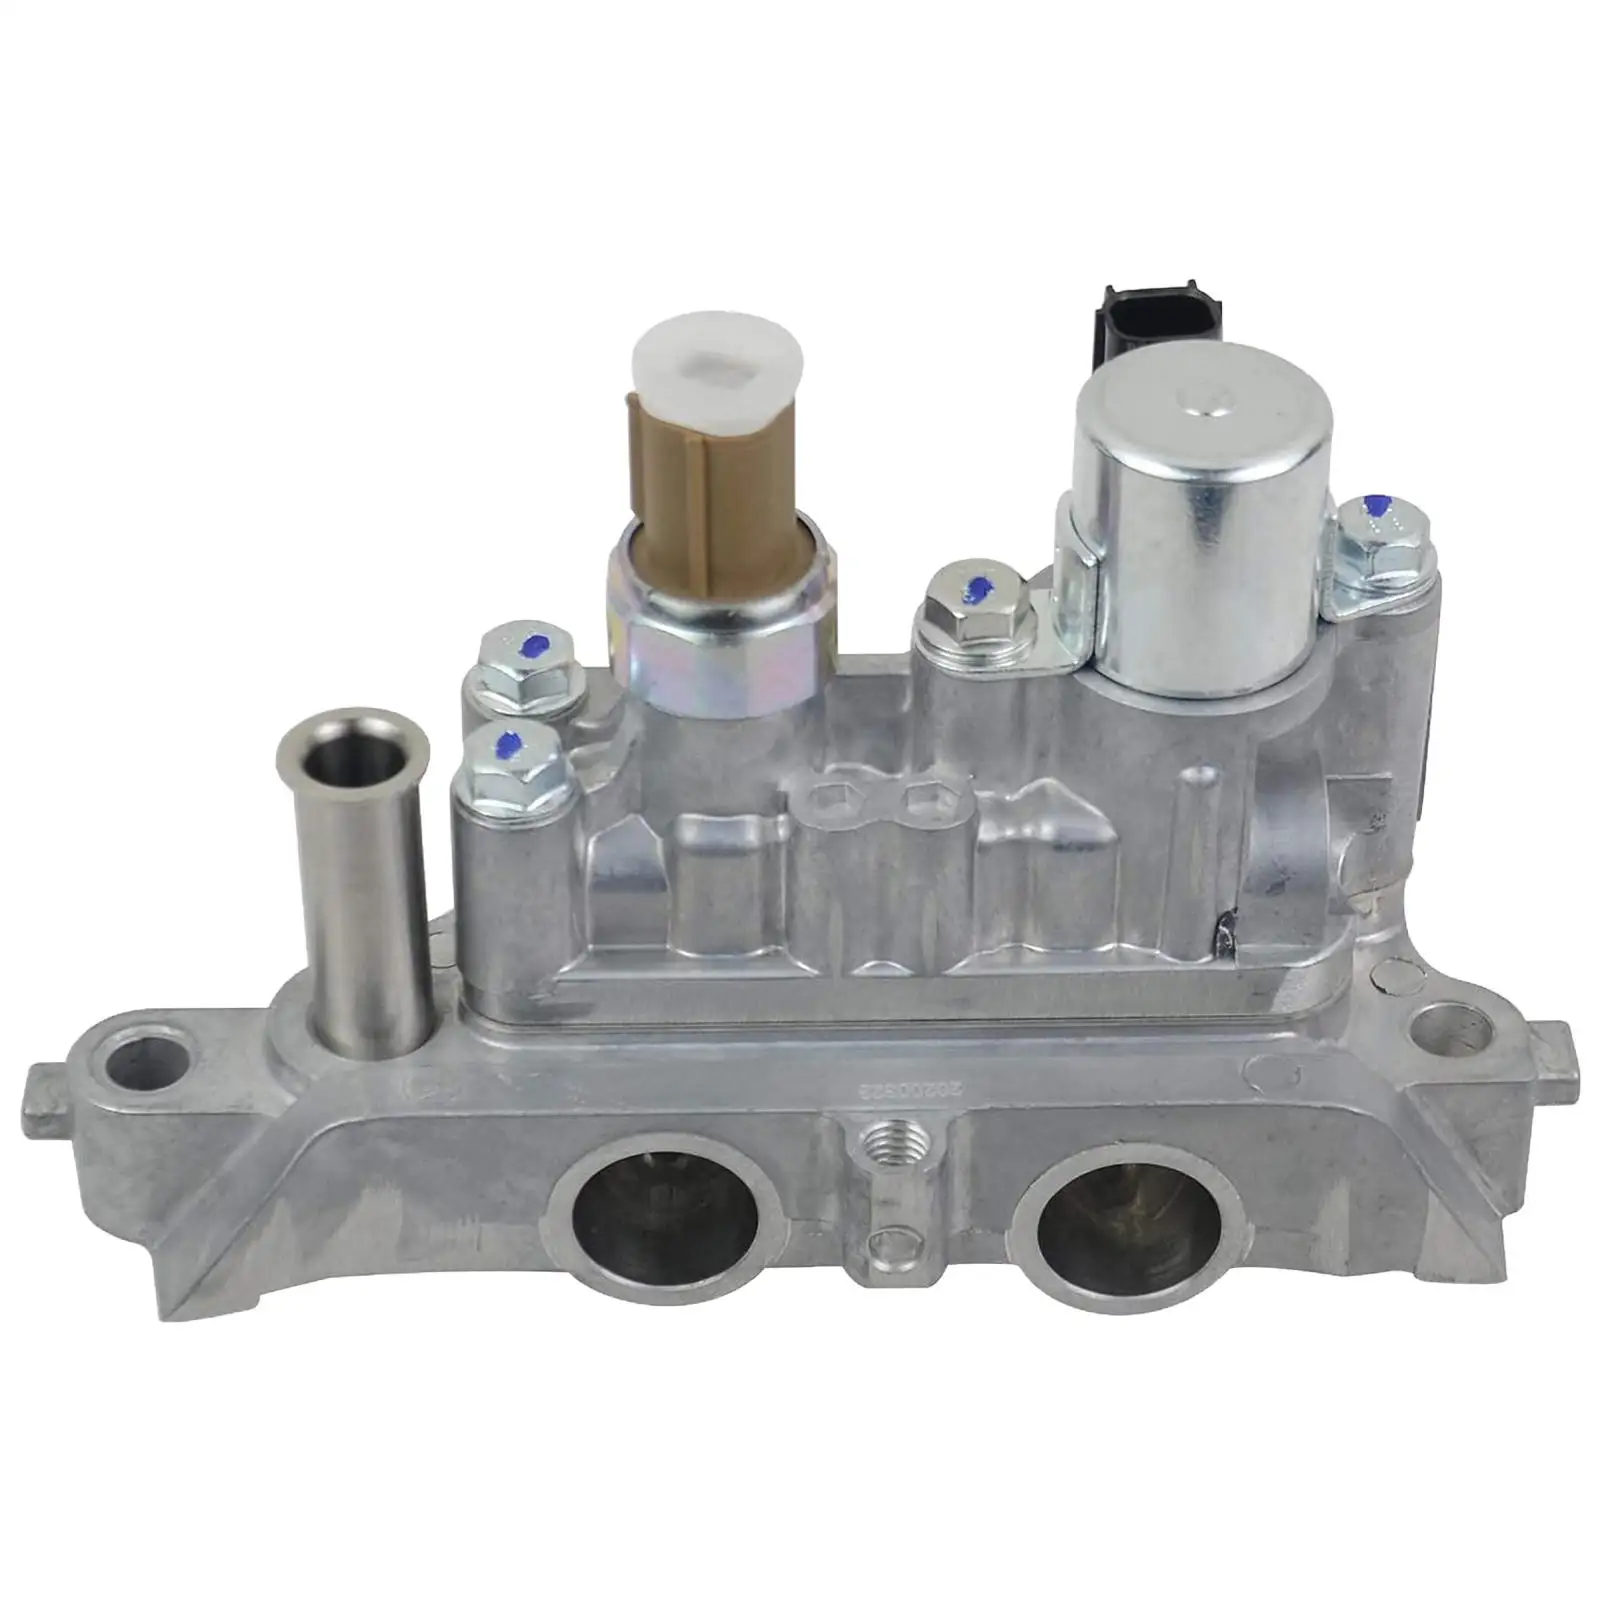 Auto Engine Oil Control Valve Automotive Valvetrain Interior Parts Mechanical Stability 15810-R70-A04 Fit for Acura RDX 13-15